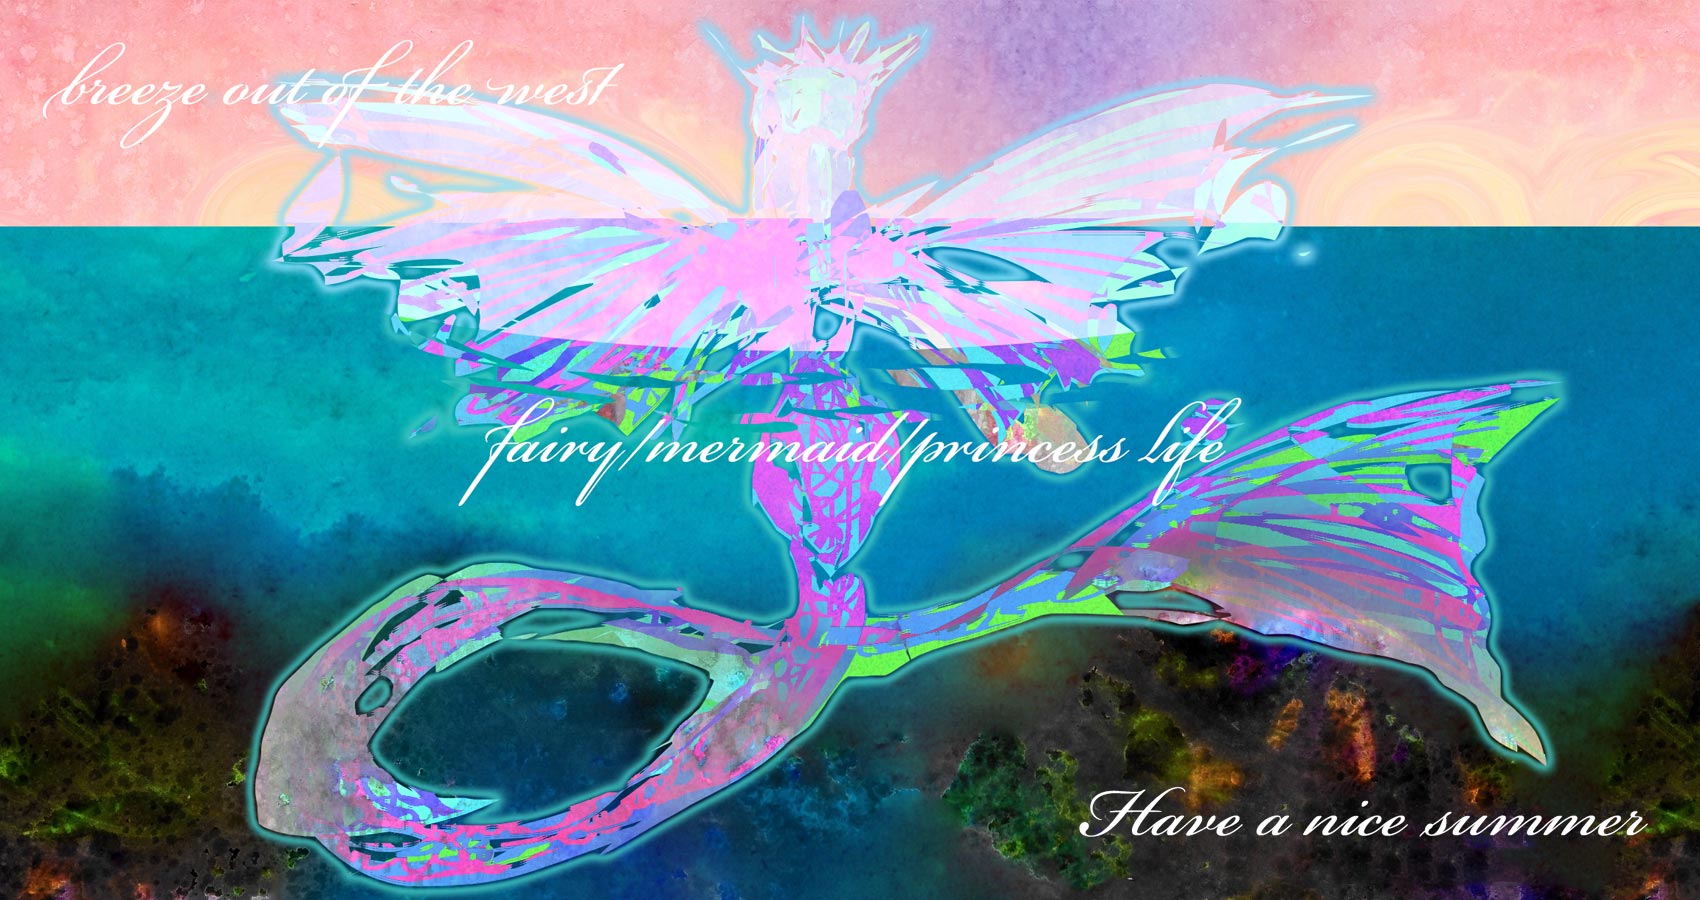 Fairy Mermaid Princess Life, haiku by Robyn MacKinnon at Spillwords.com